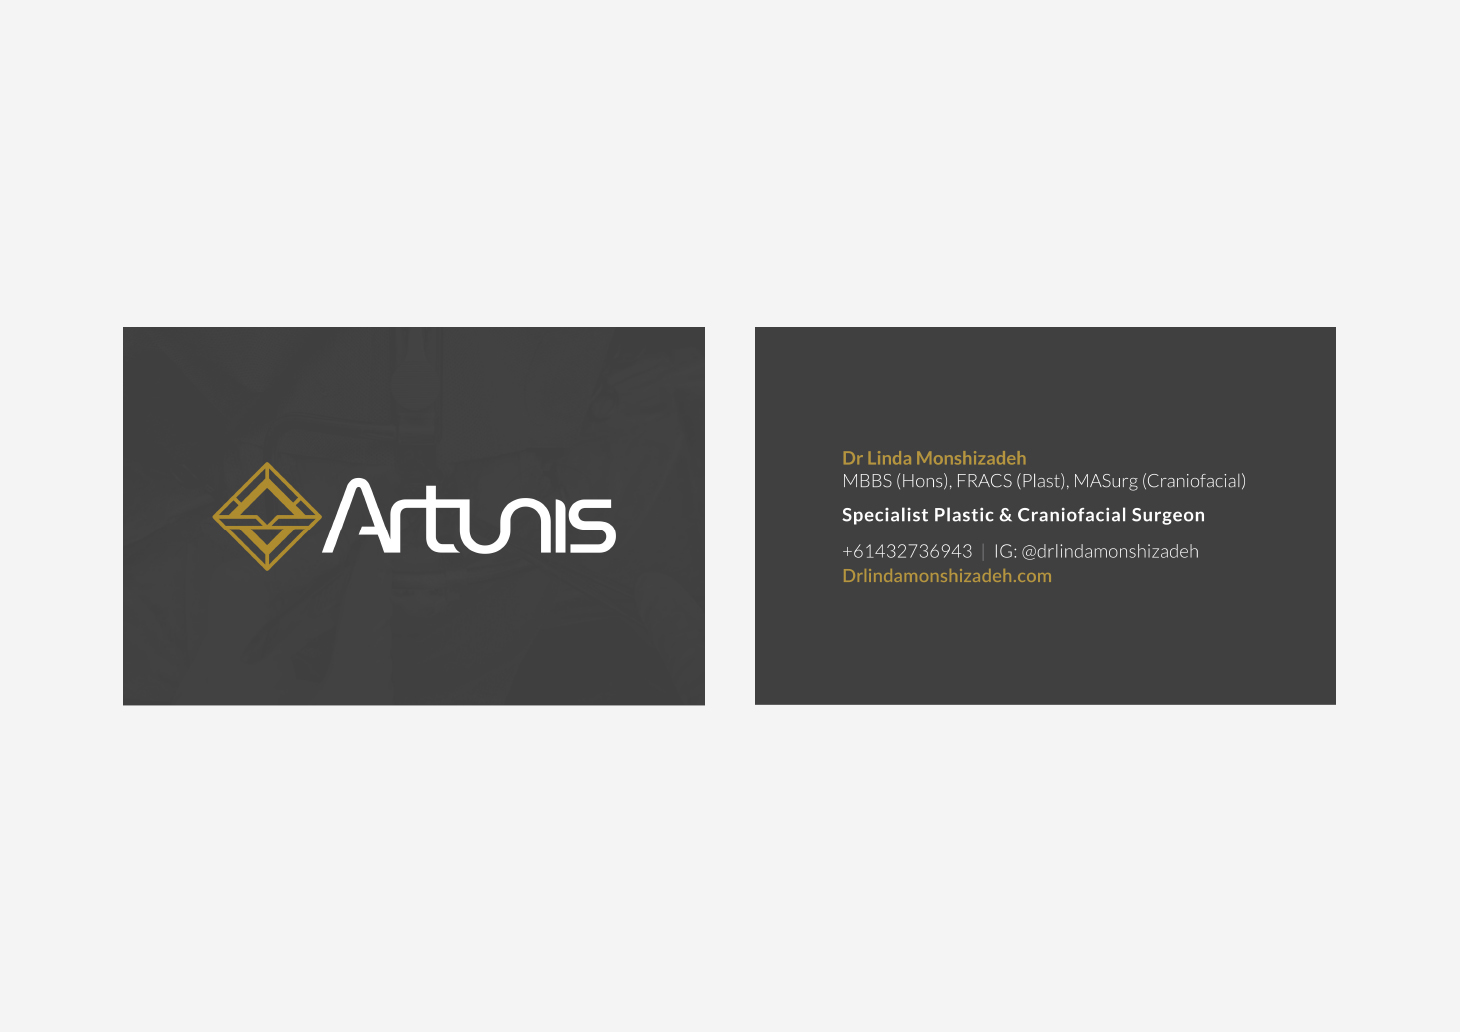 artunis-work-cards